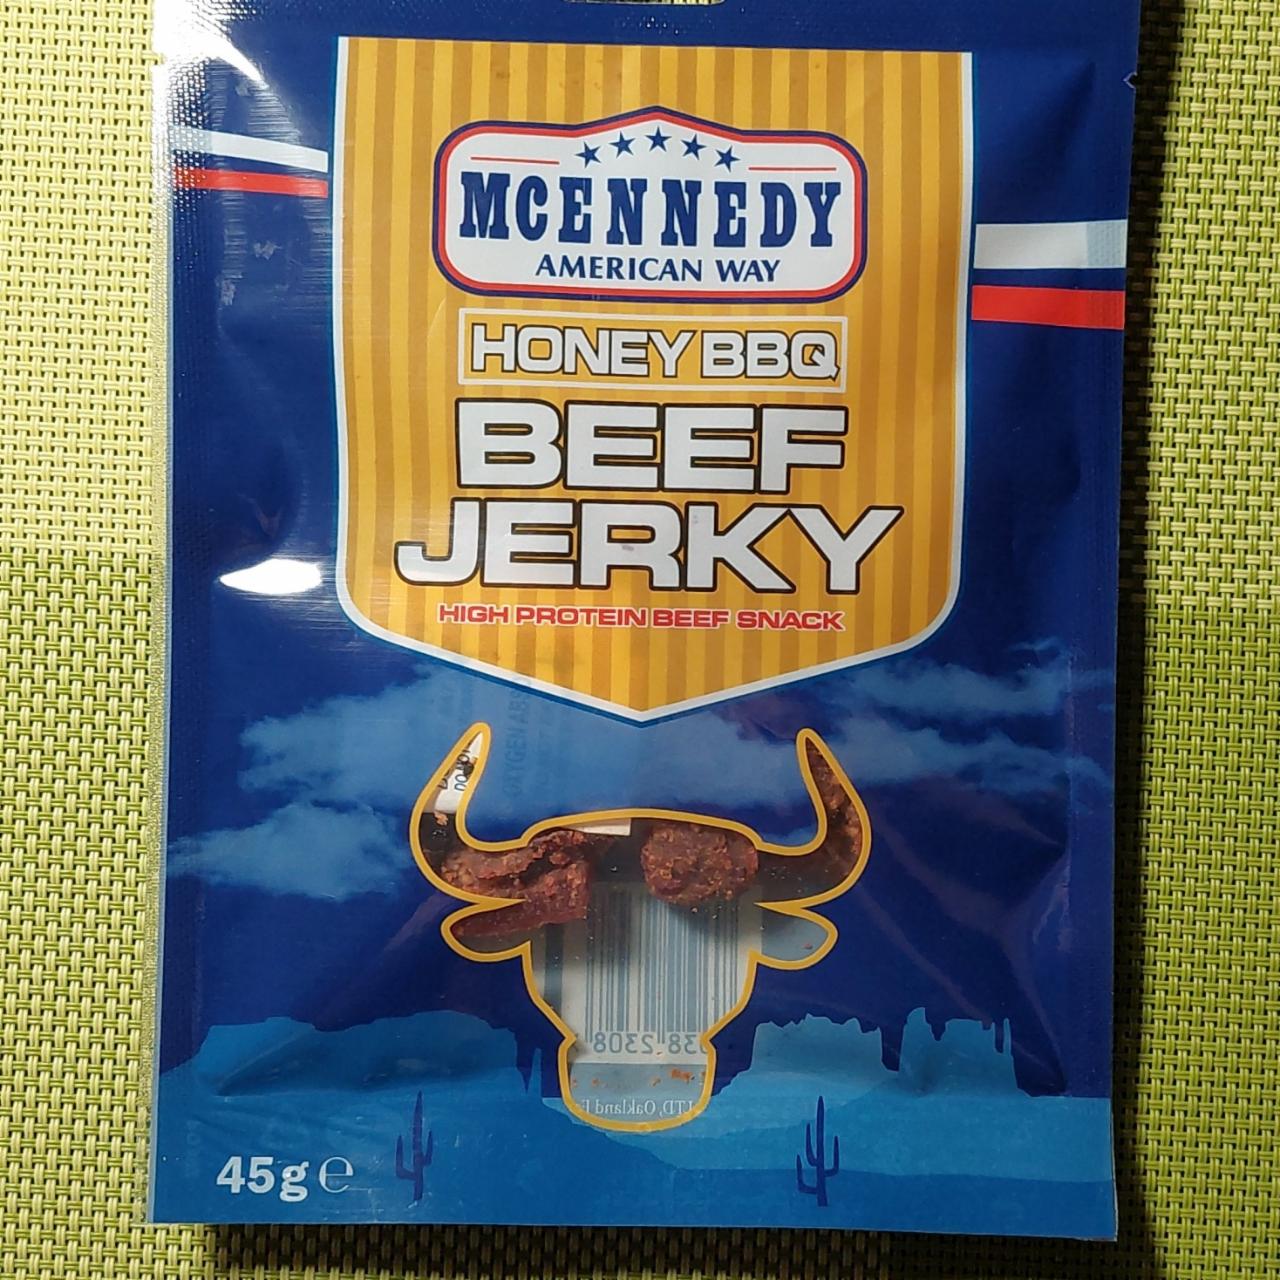 Fotografie - Honey BBQ Beef Jerky McEnnedy American Way